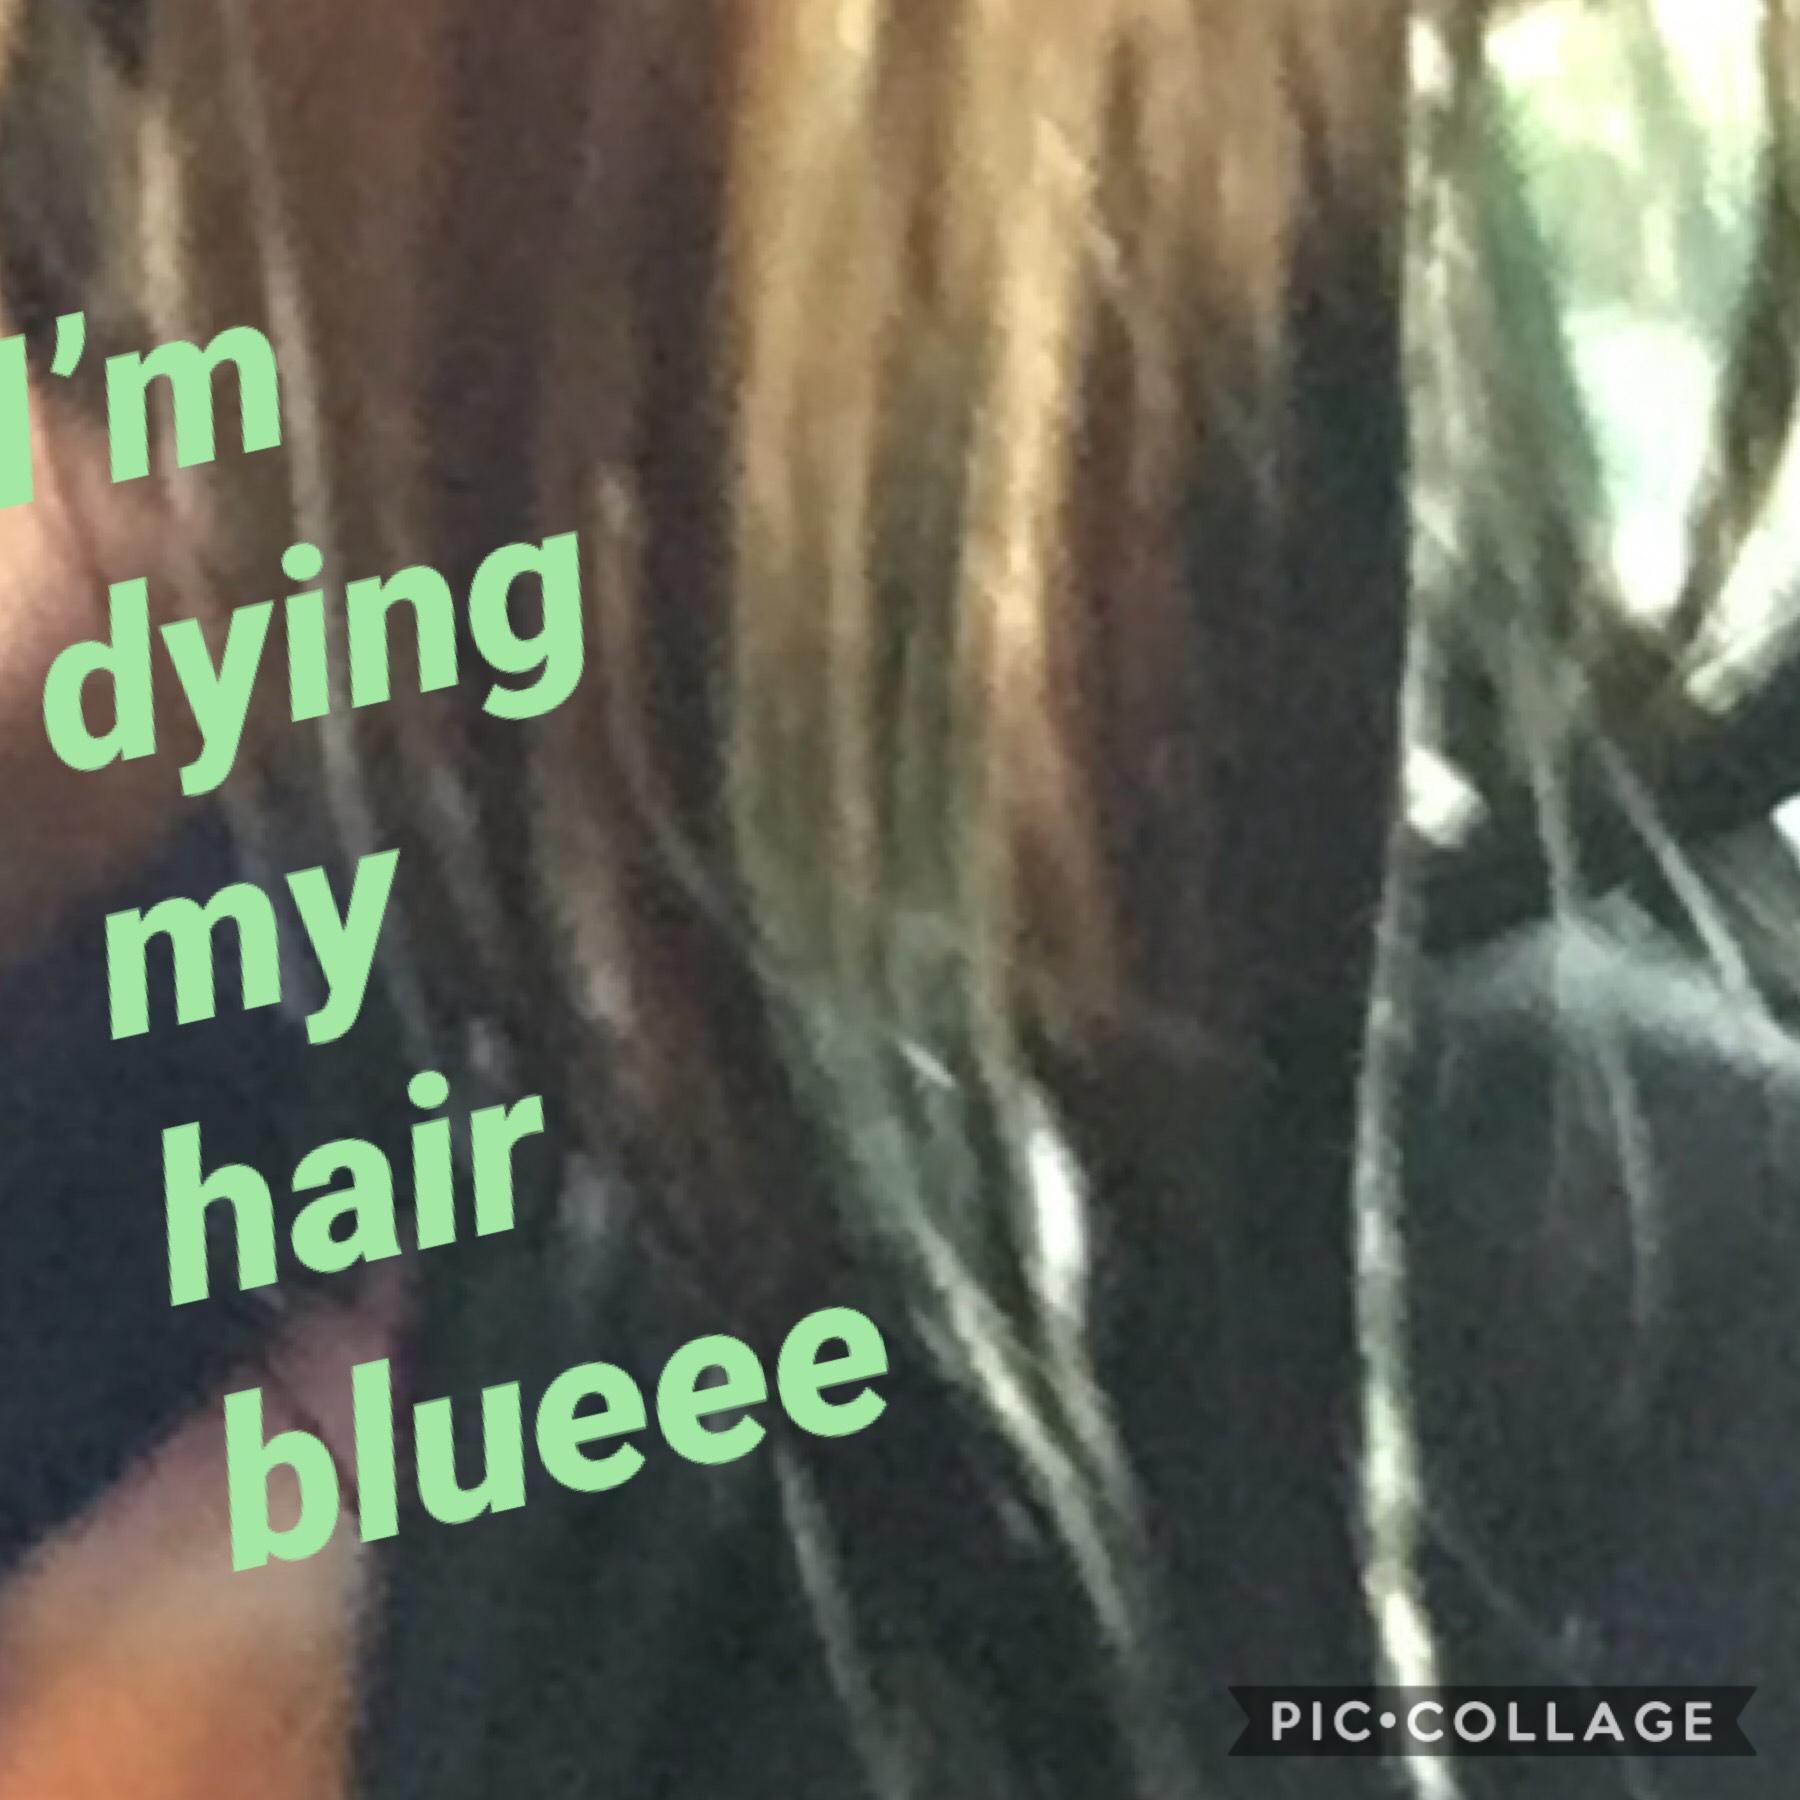 I’m dying my hair Bluuuuue!